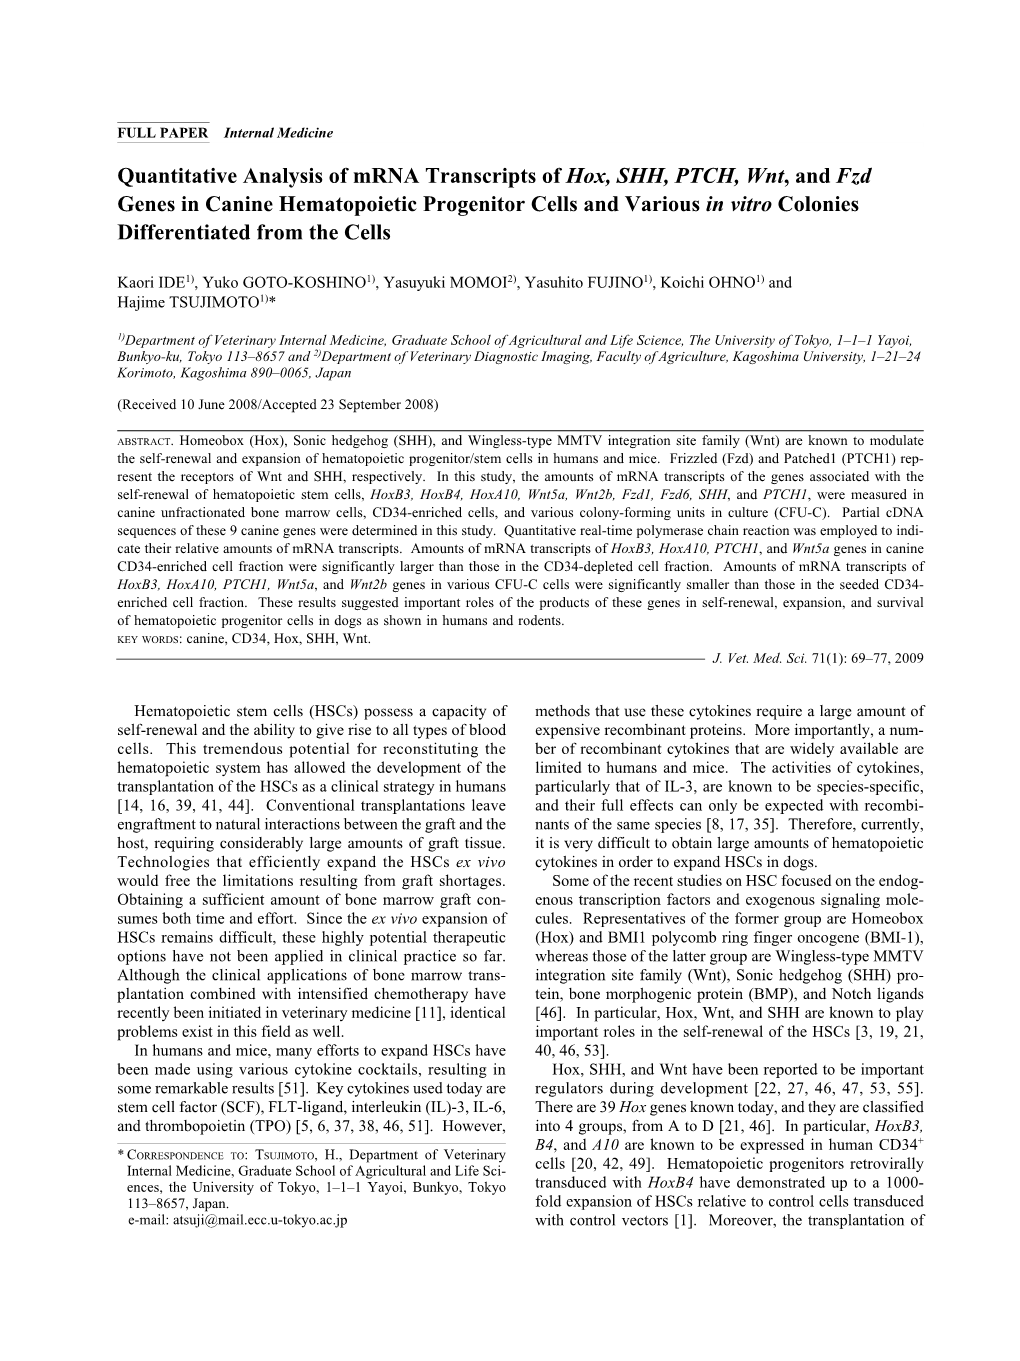 Quantitative Analysis of Mrna Transcripts of Hox, SHH, PTCH